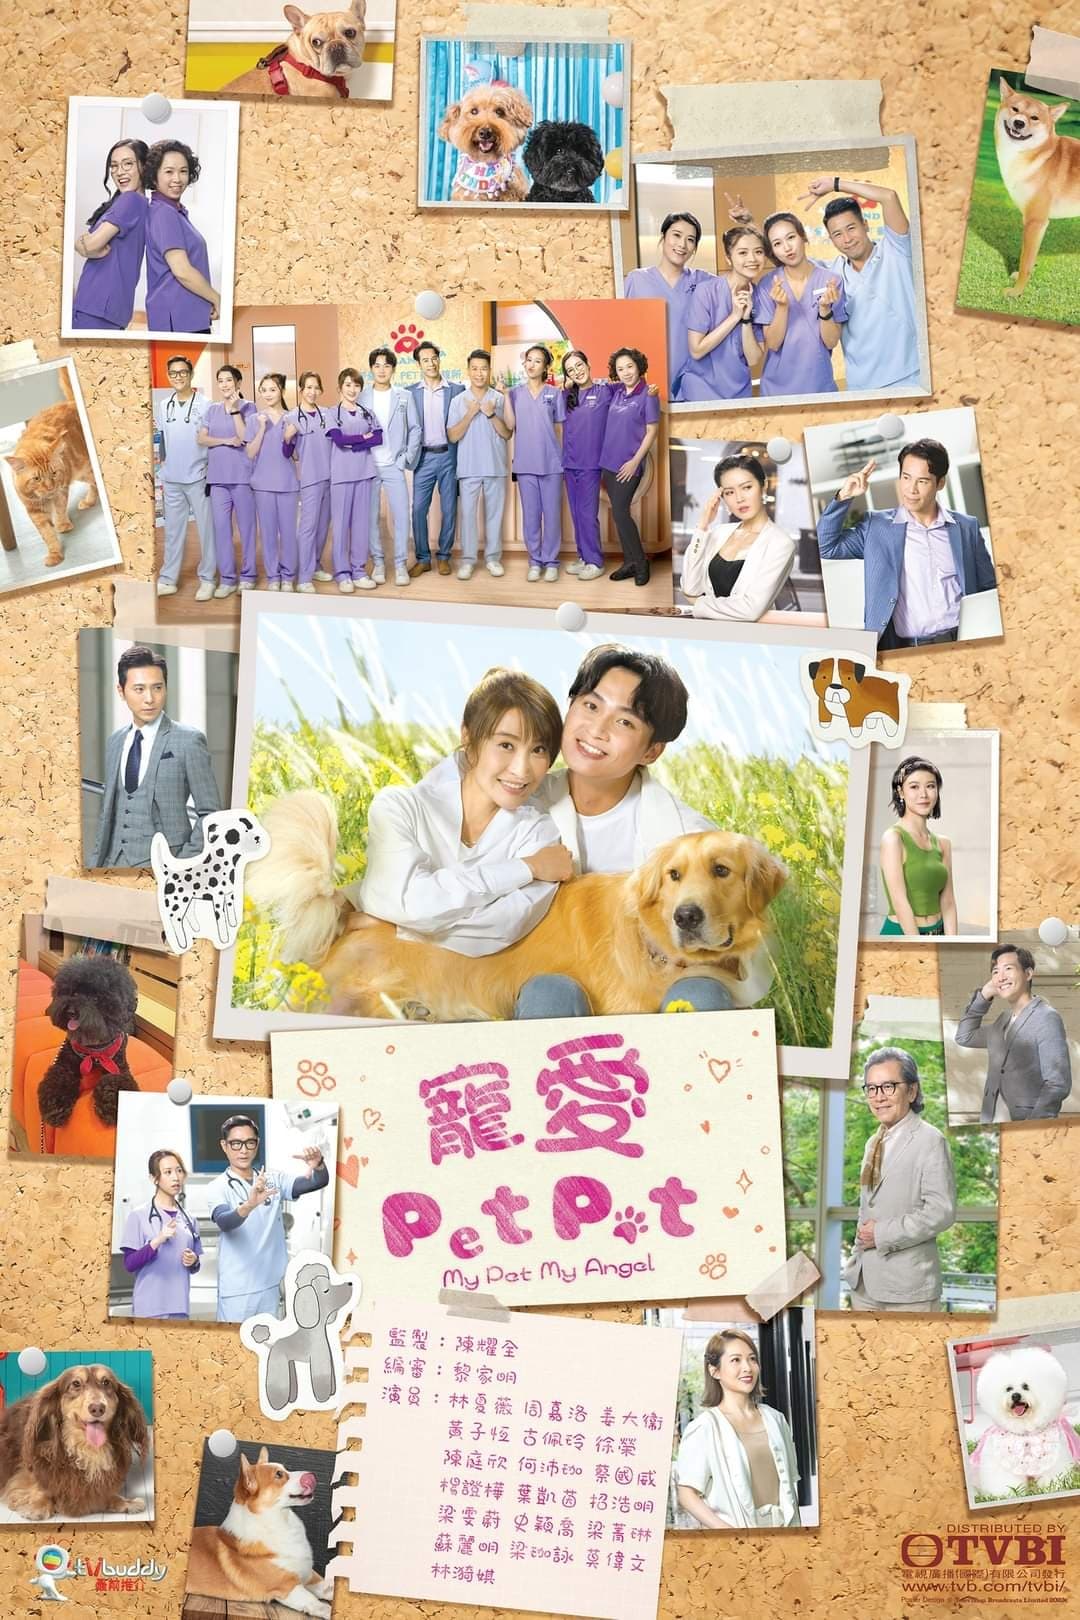 TV ratings for My Pet My Angel (寵愛Pet Pet) in New Zealand. TVB Jade TV series